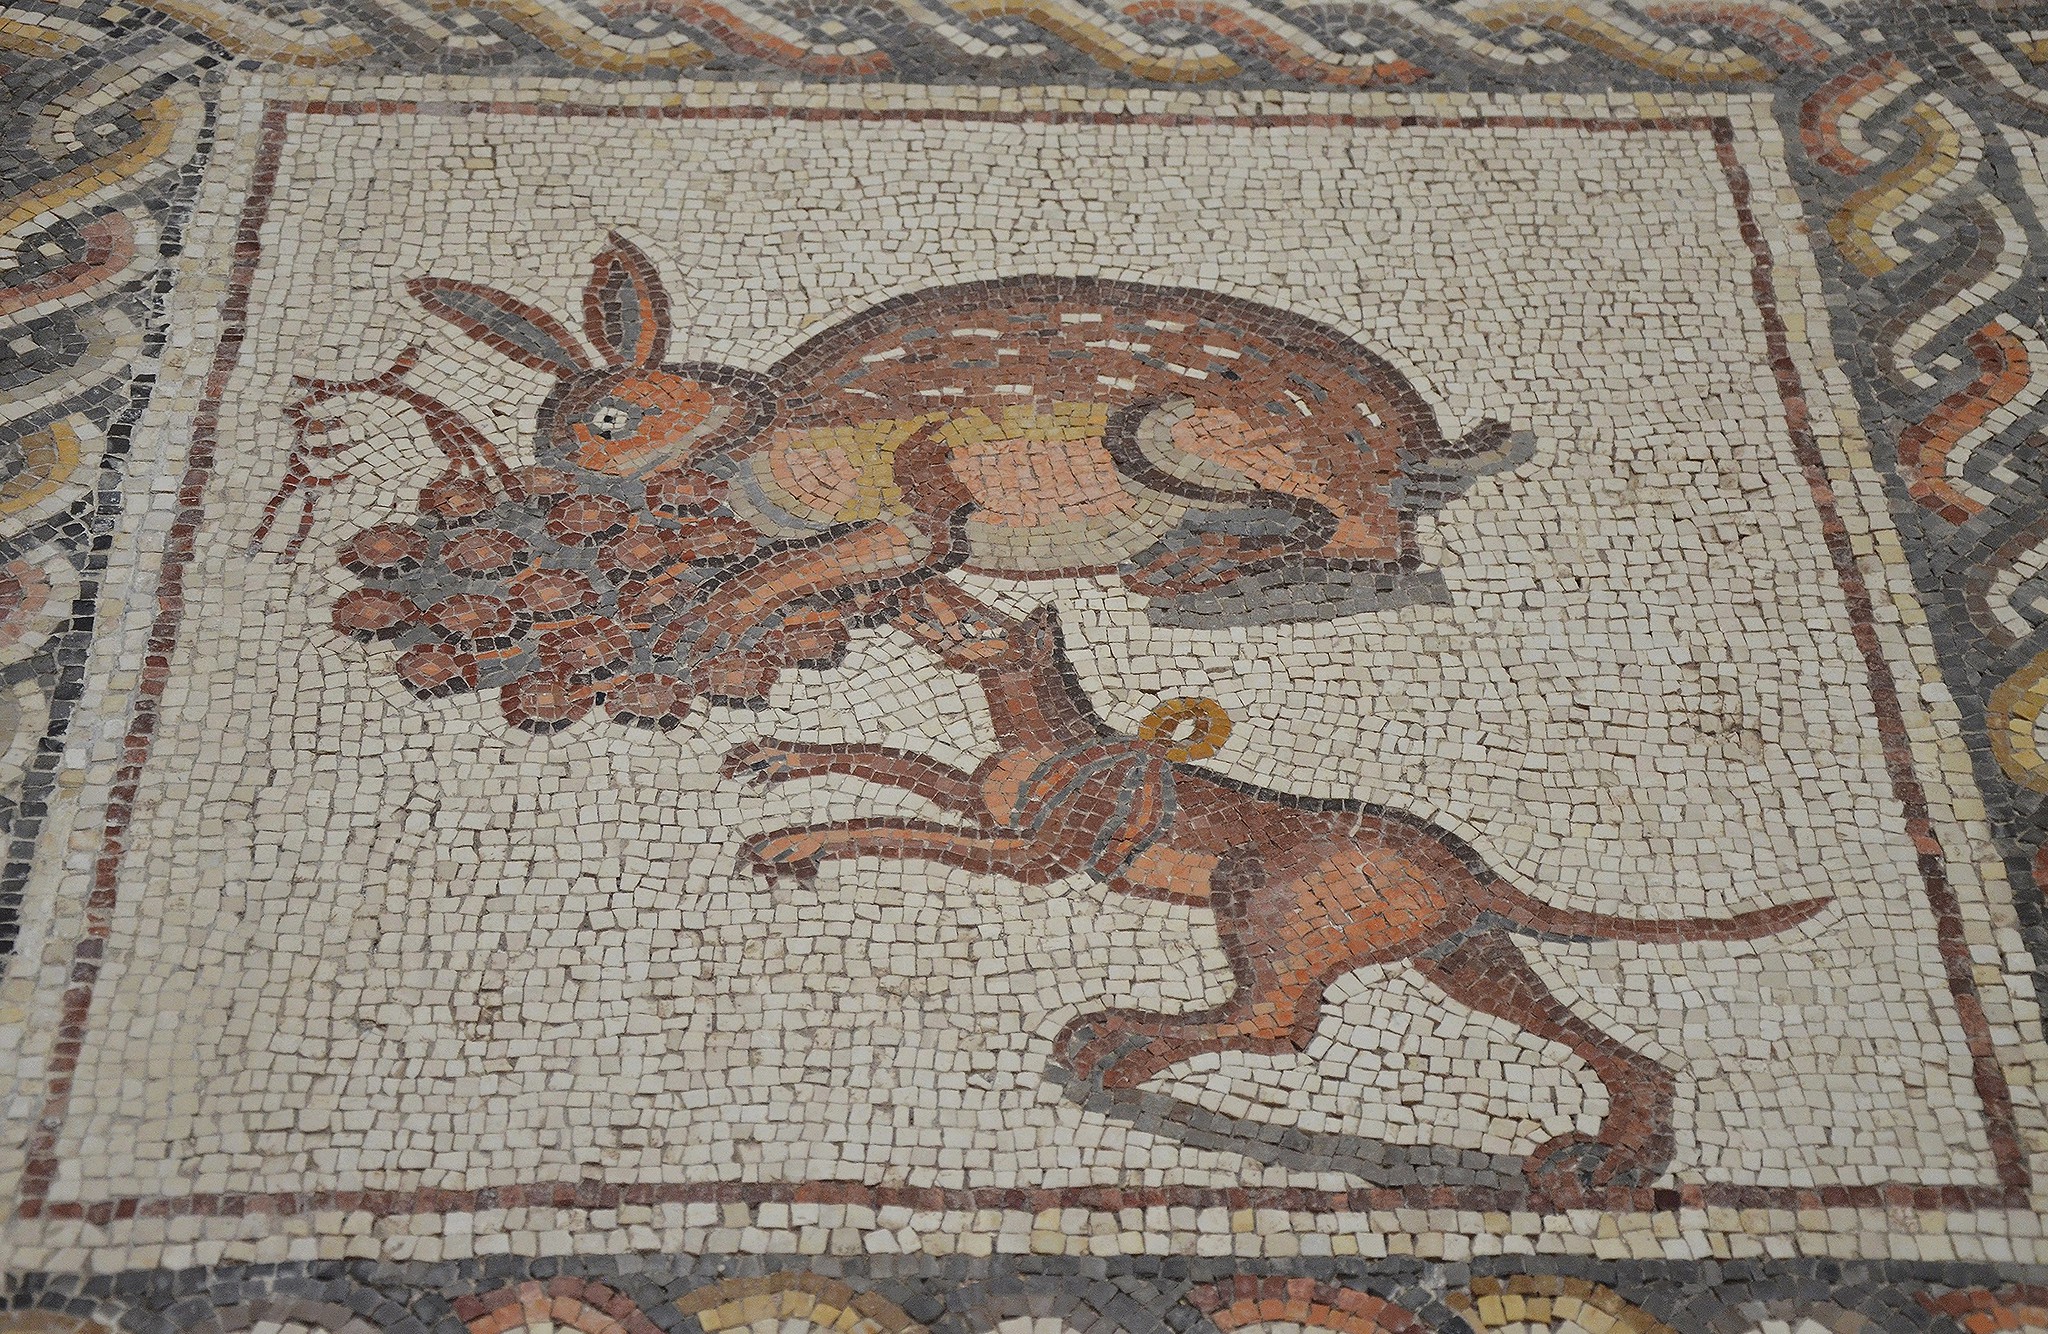 https://www.worldhistory.org/image/12744/hunting-dog-mosaic/download/